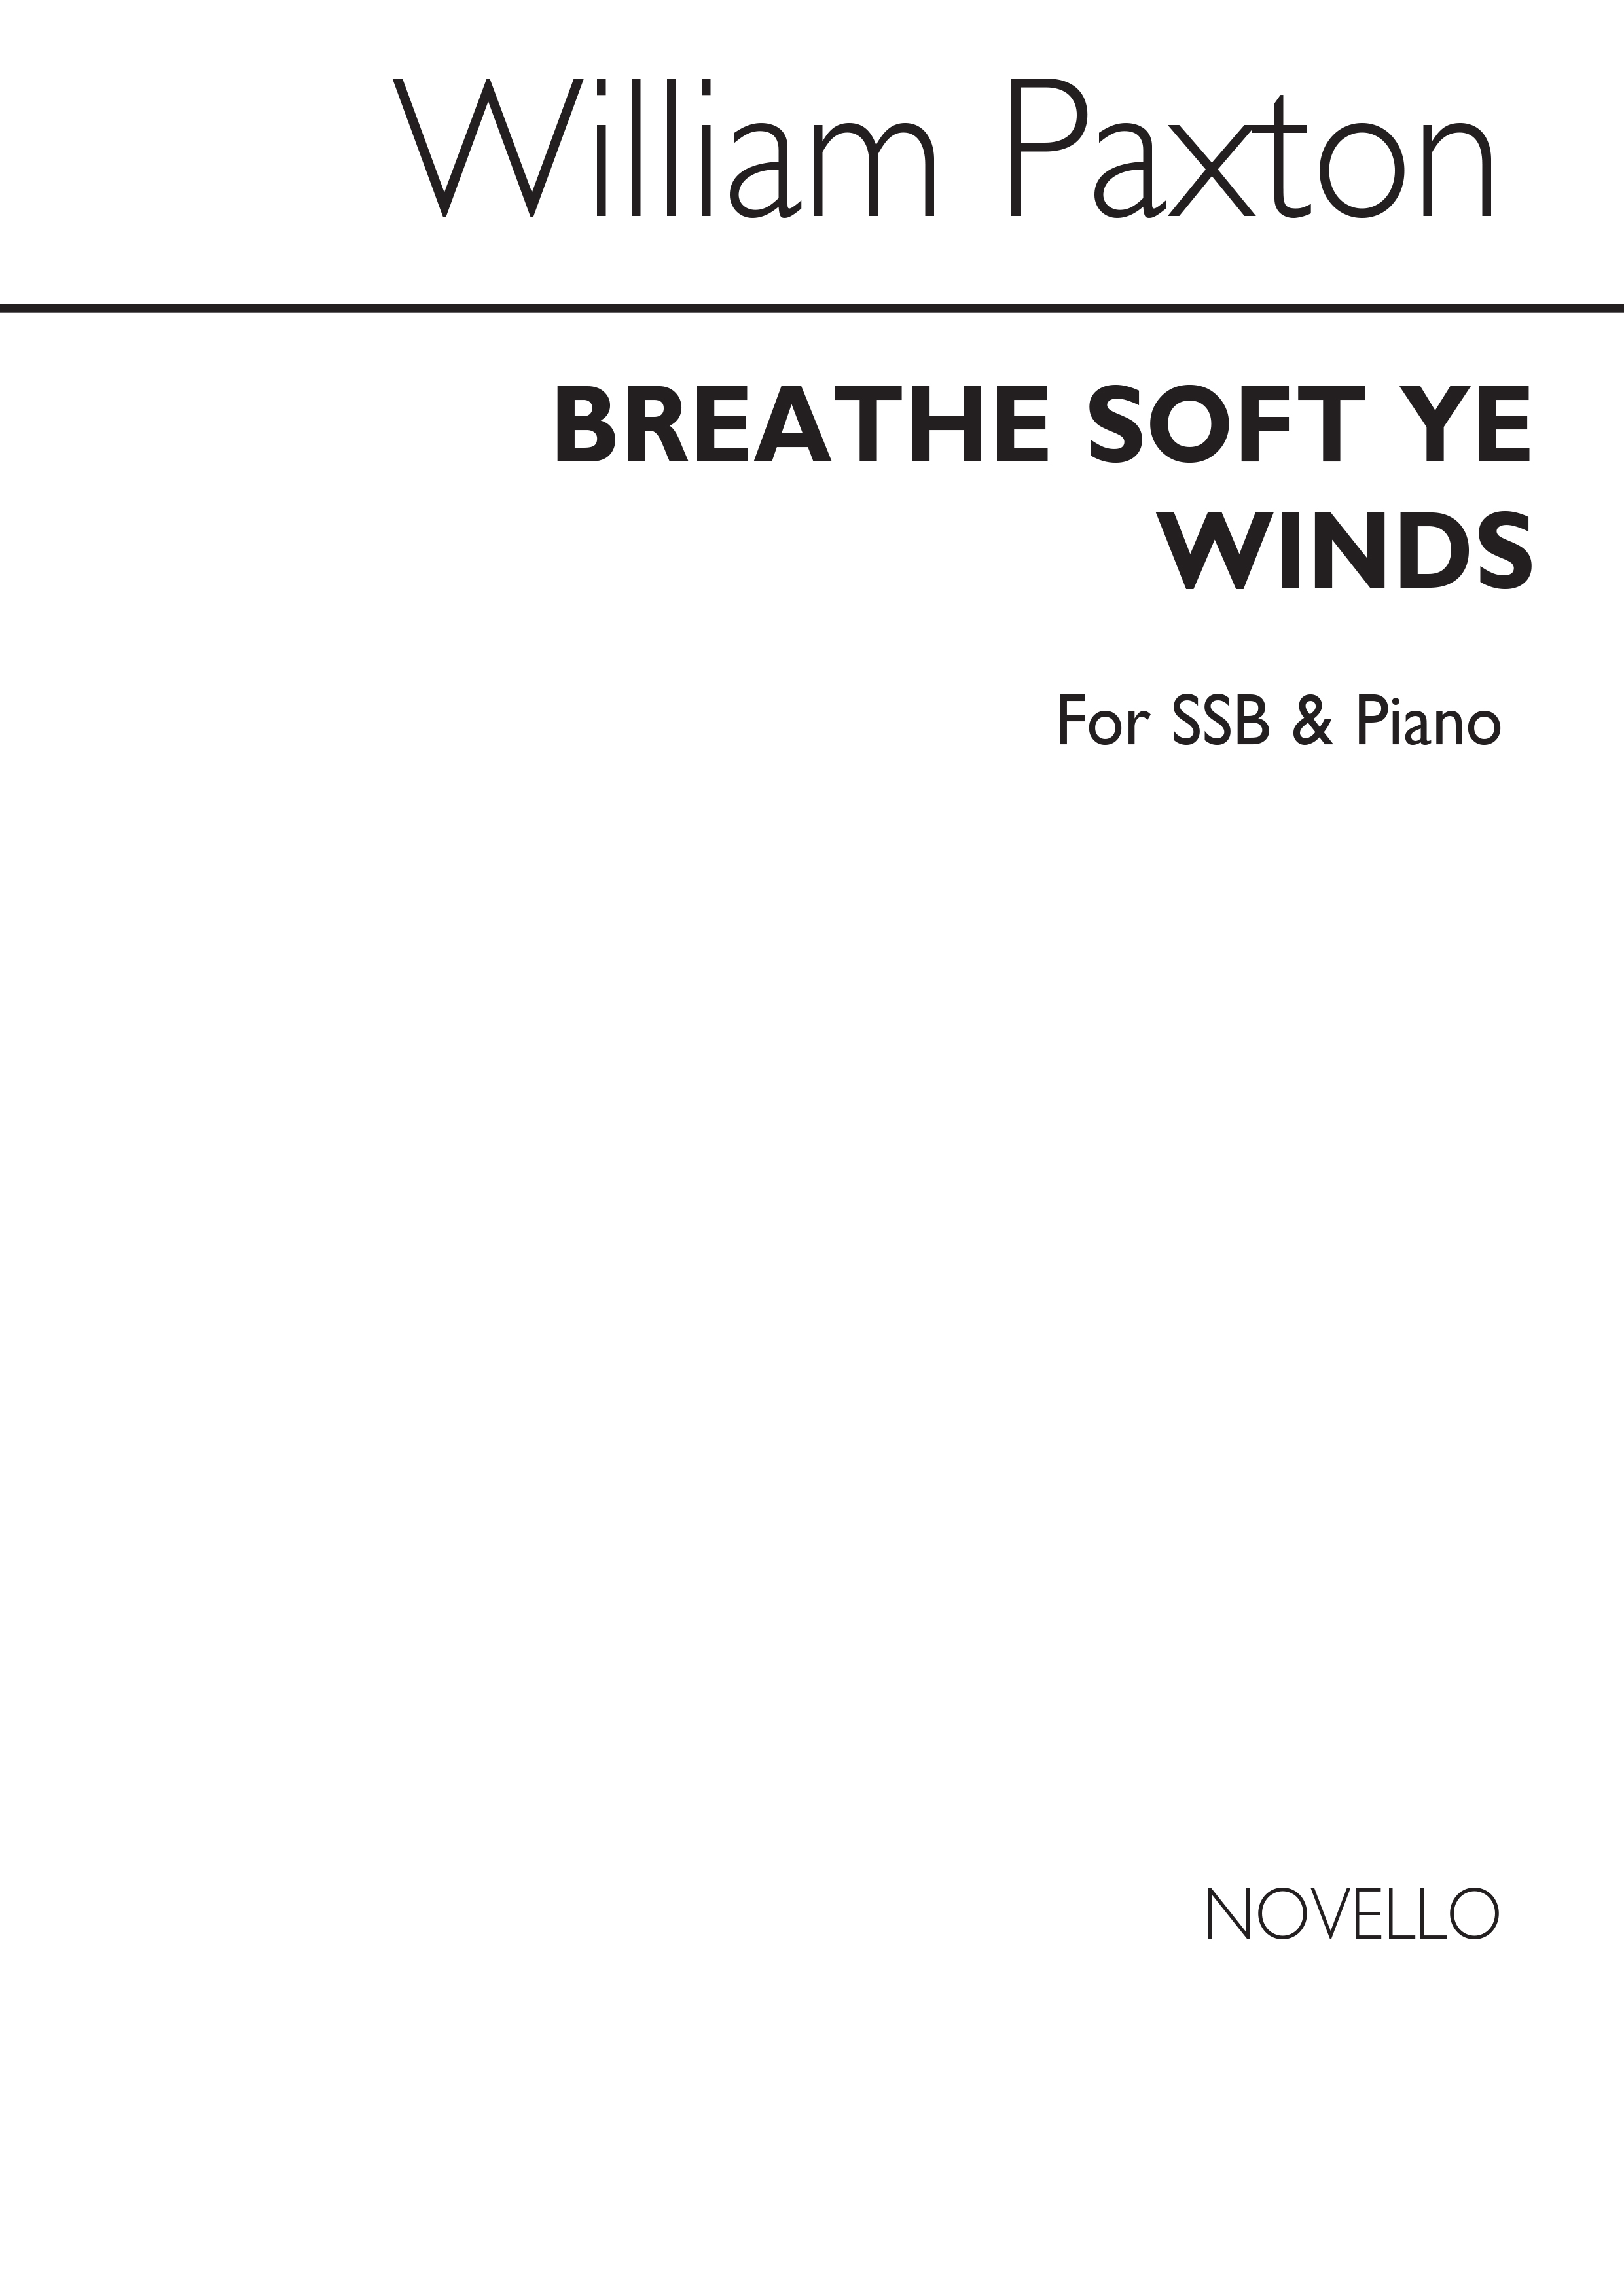 William Paxton: Breathe Soft, Ye Winds SSB/Piano